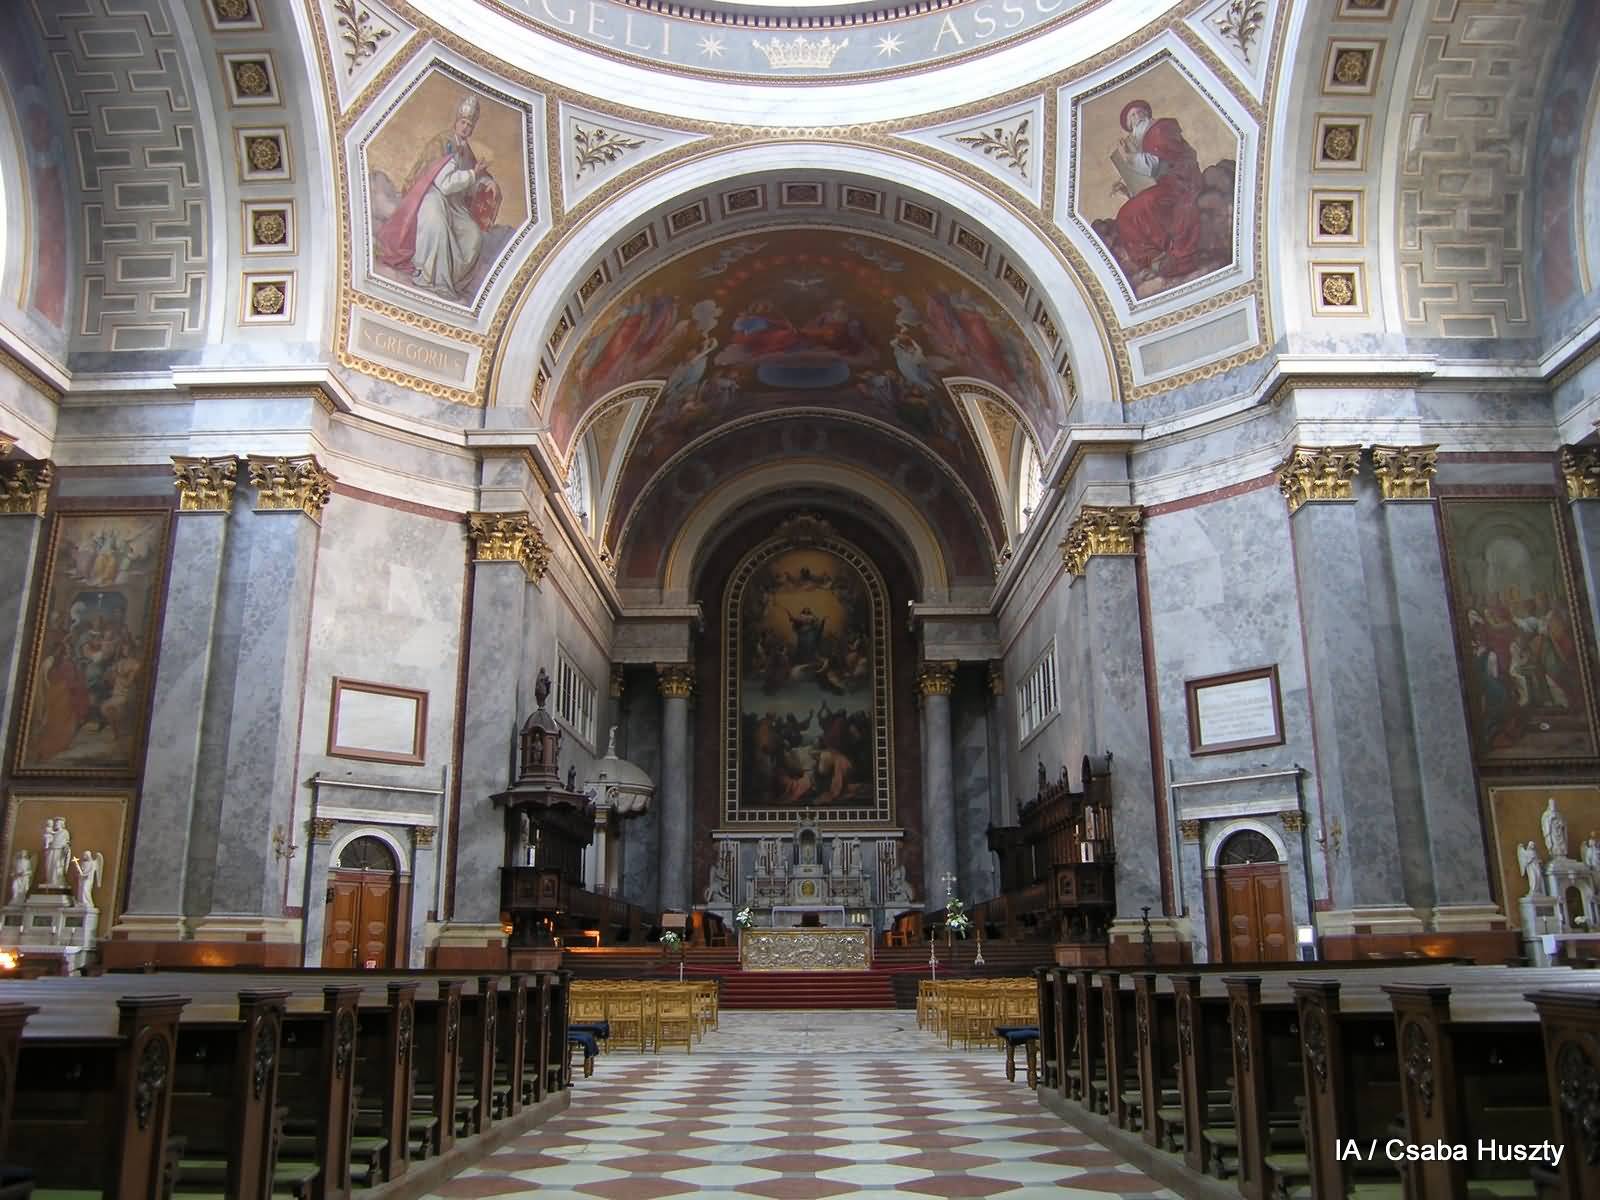 Esztergom Basilica And Organ Inside View